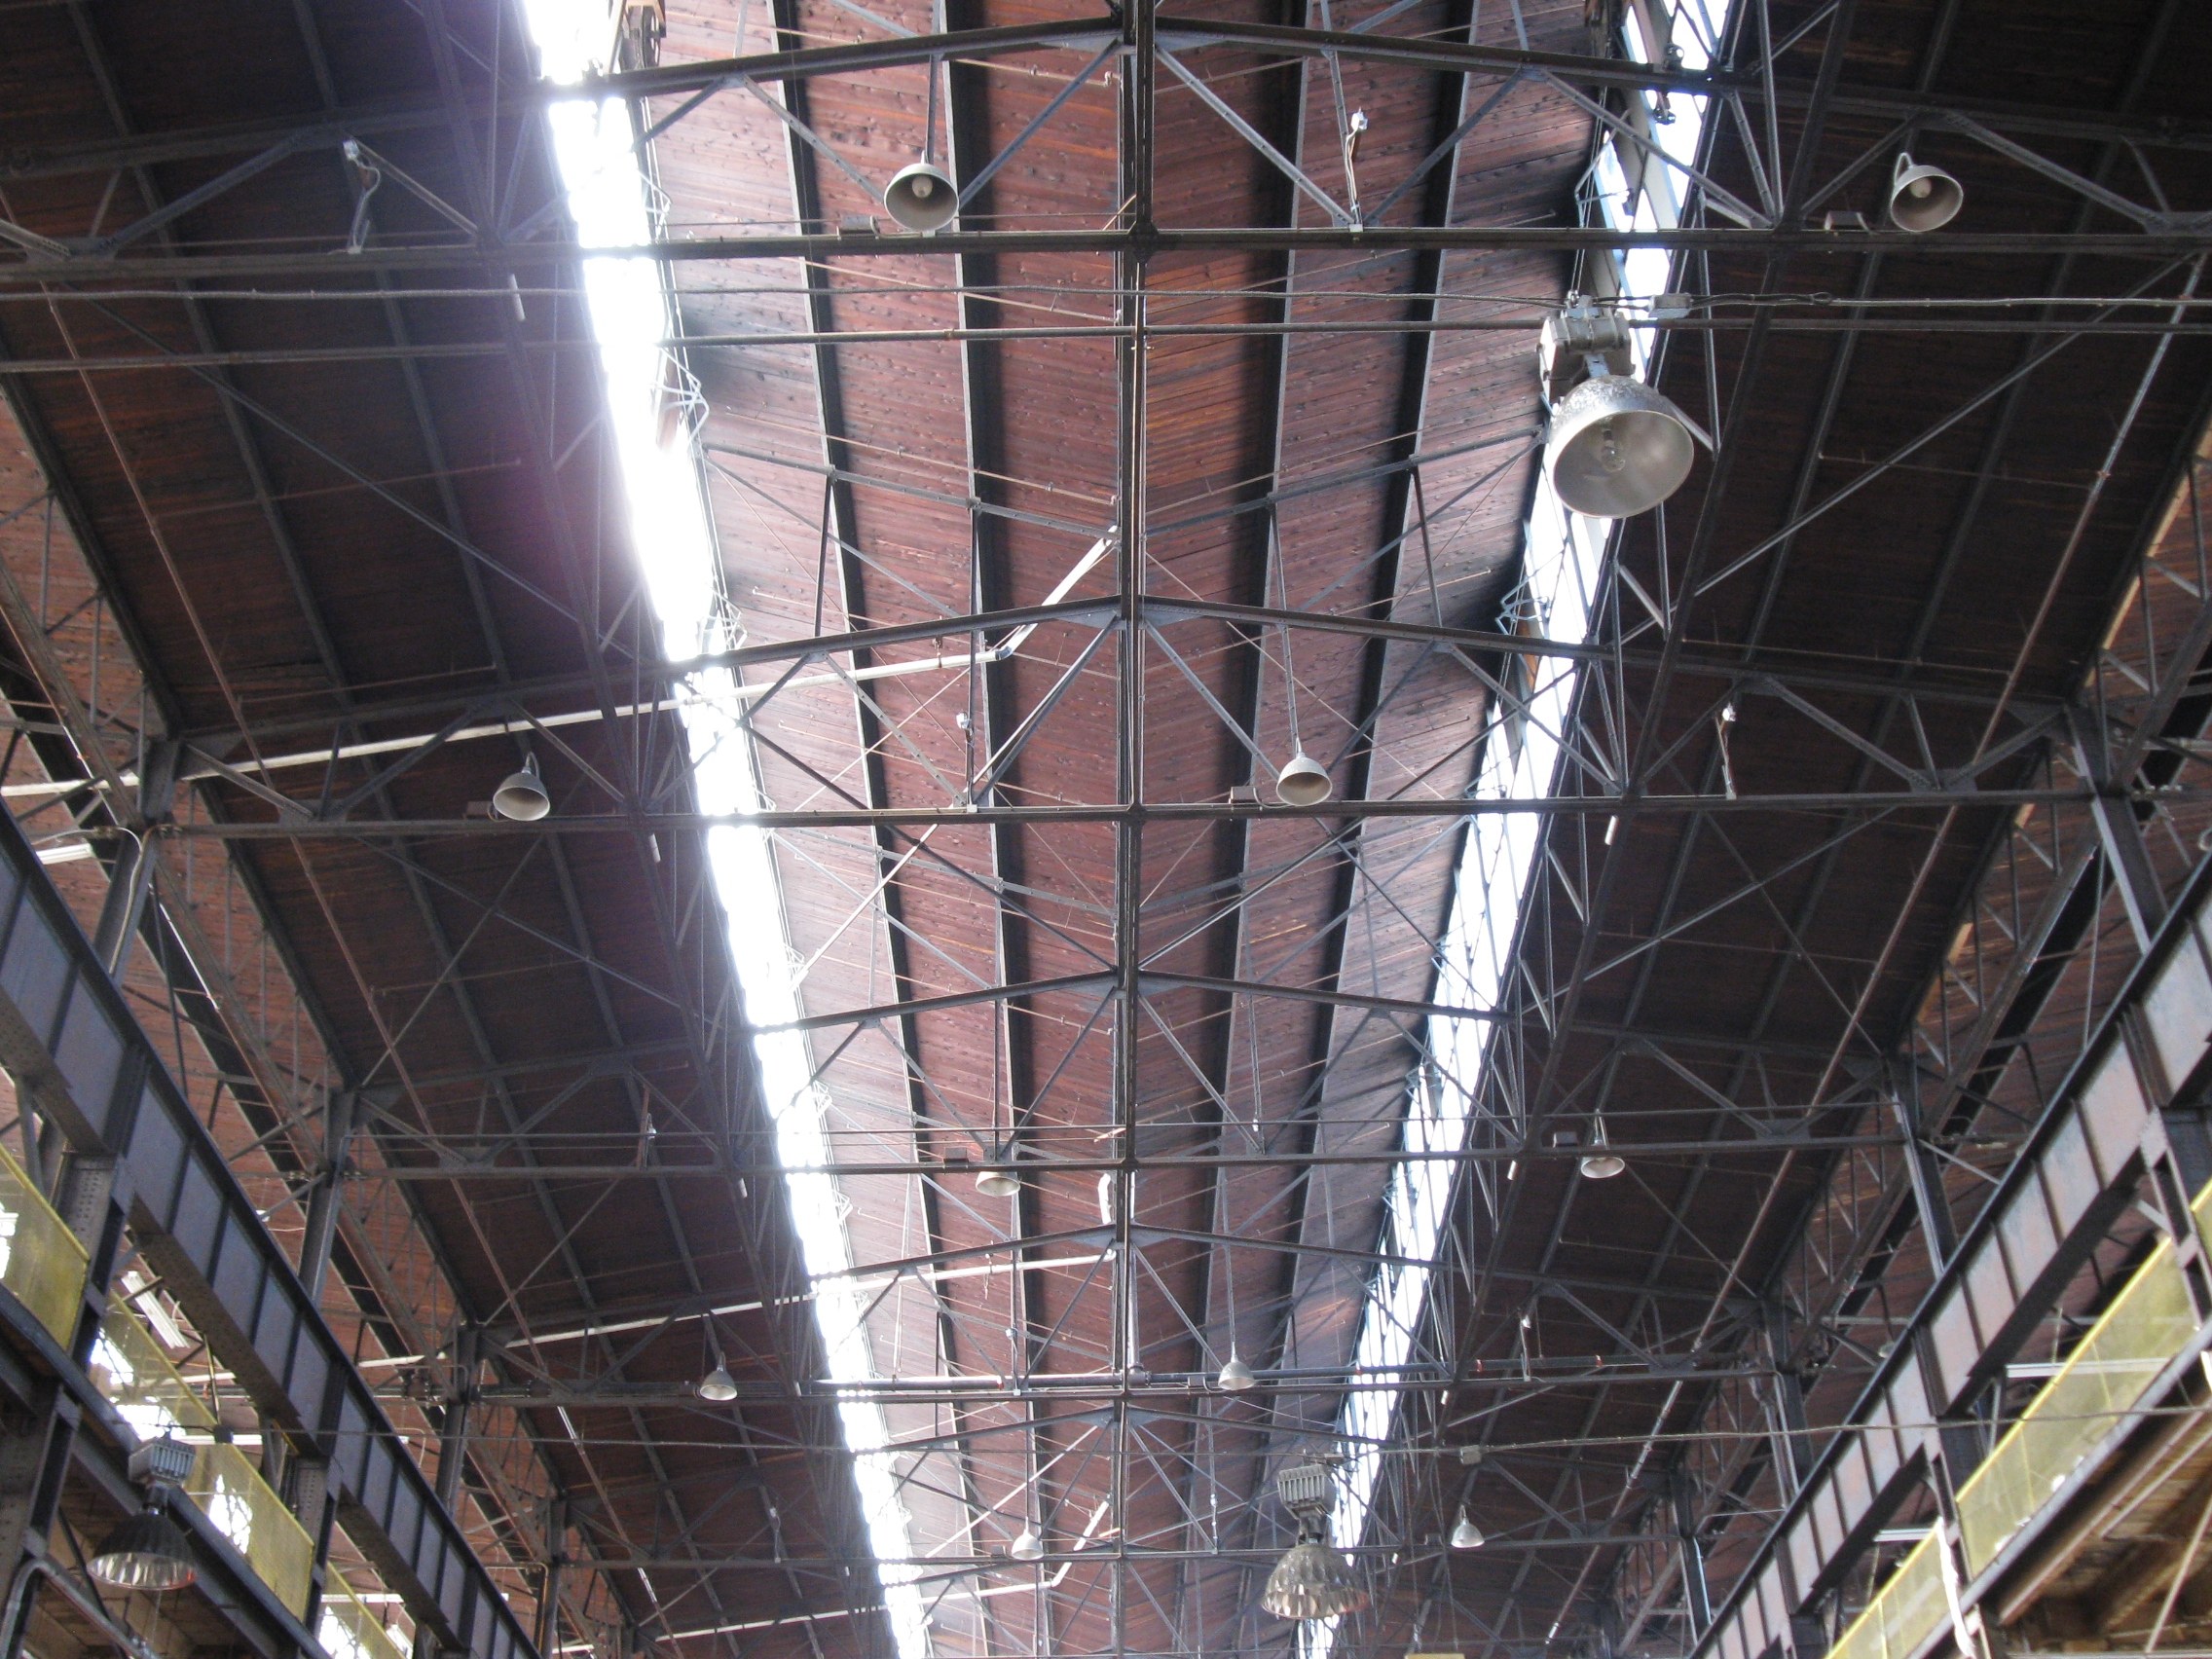 Cramp Shipyard view of Interior roof truss